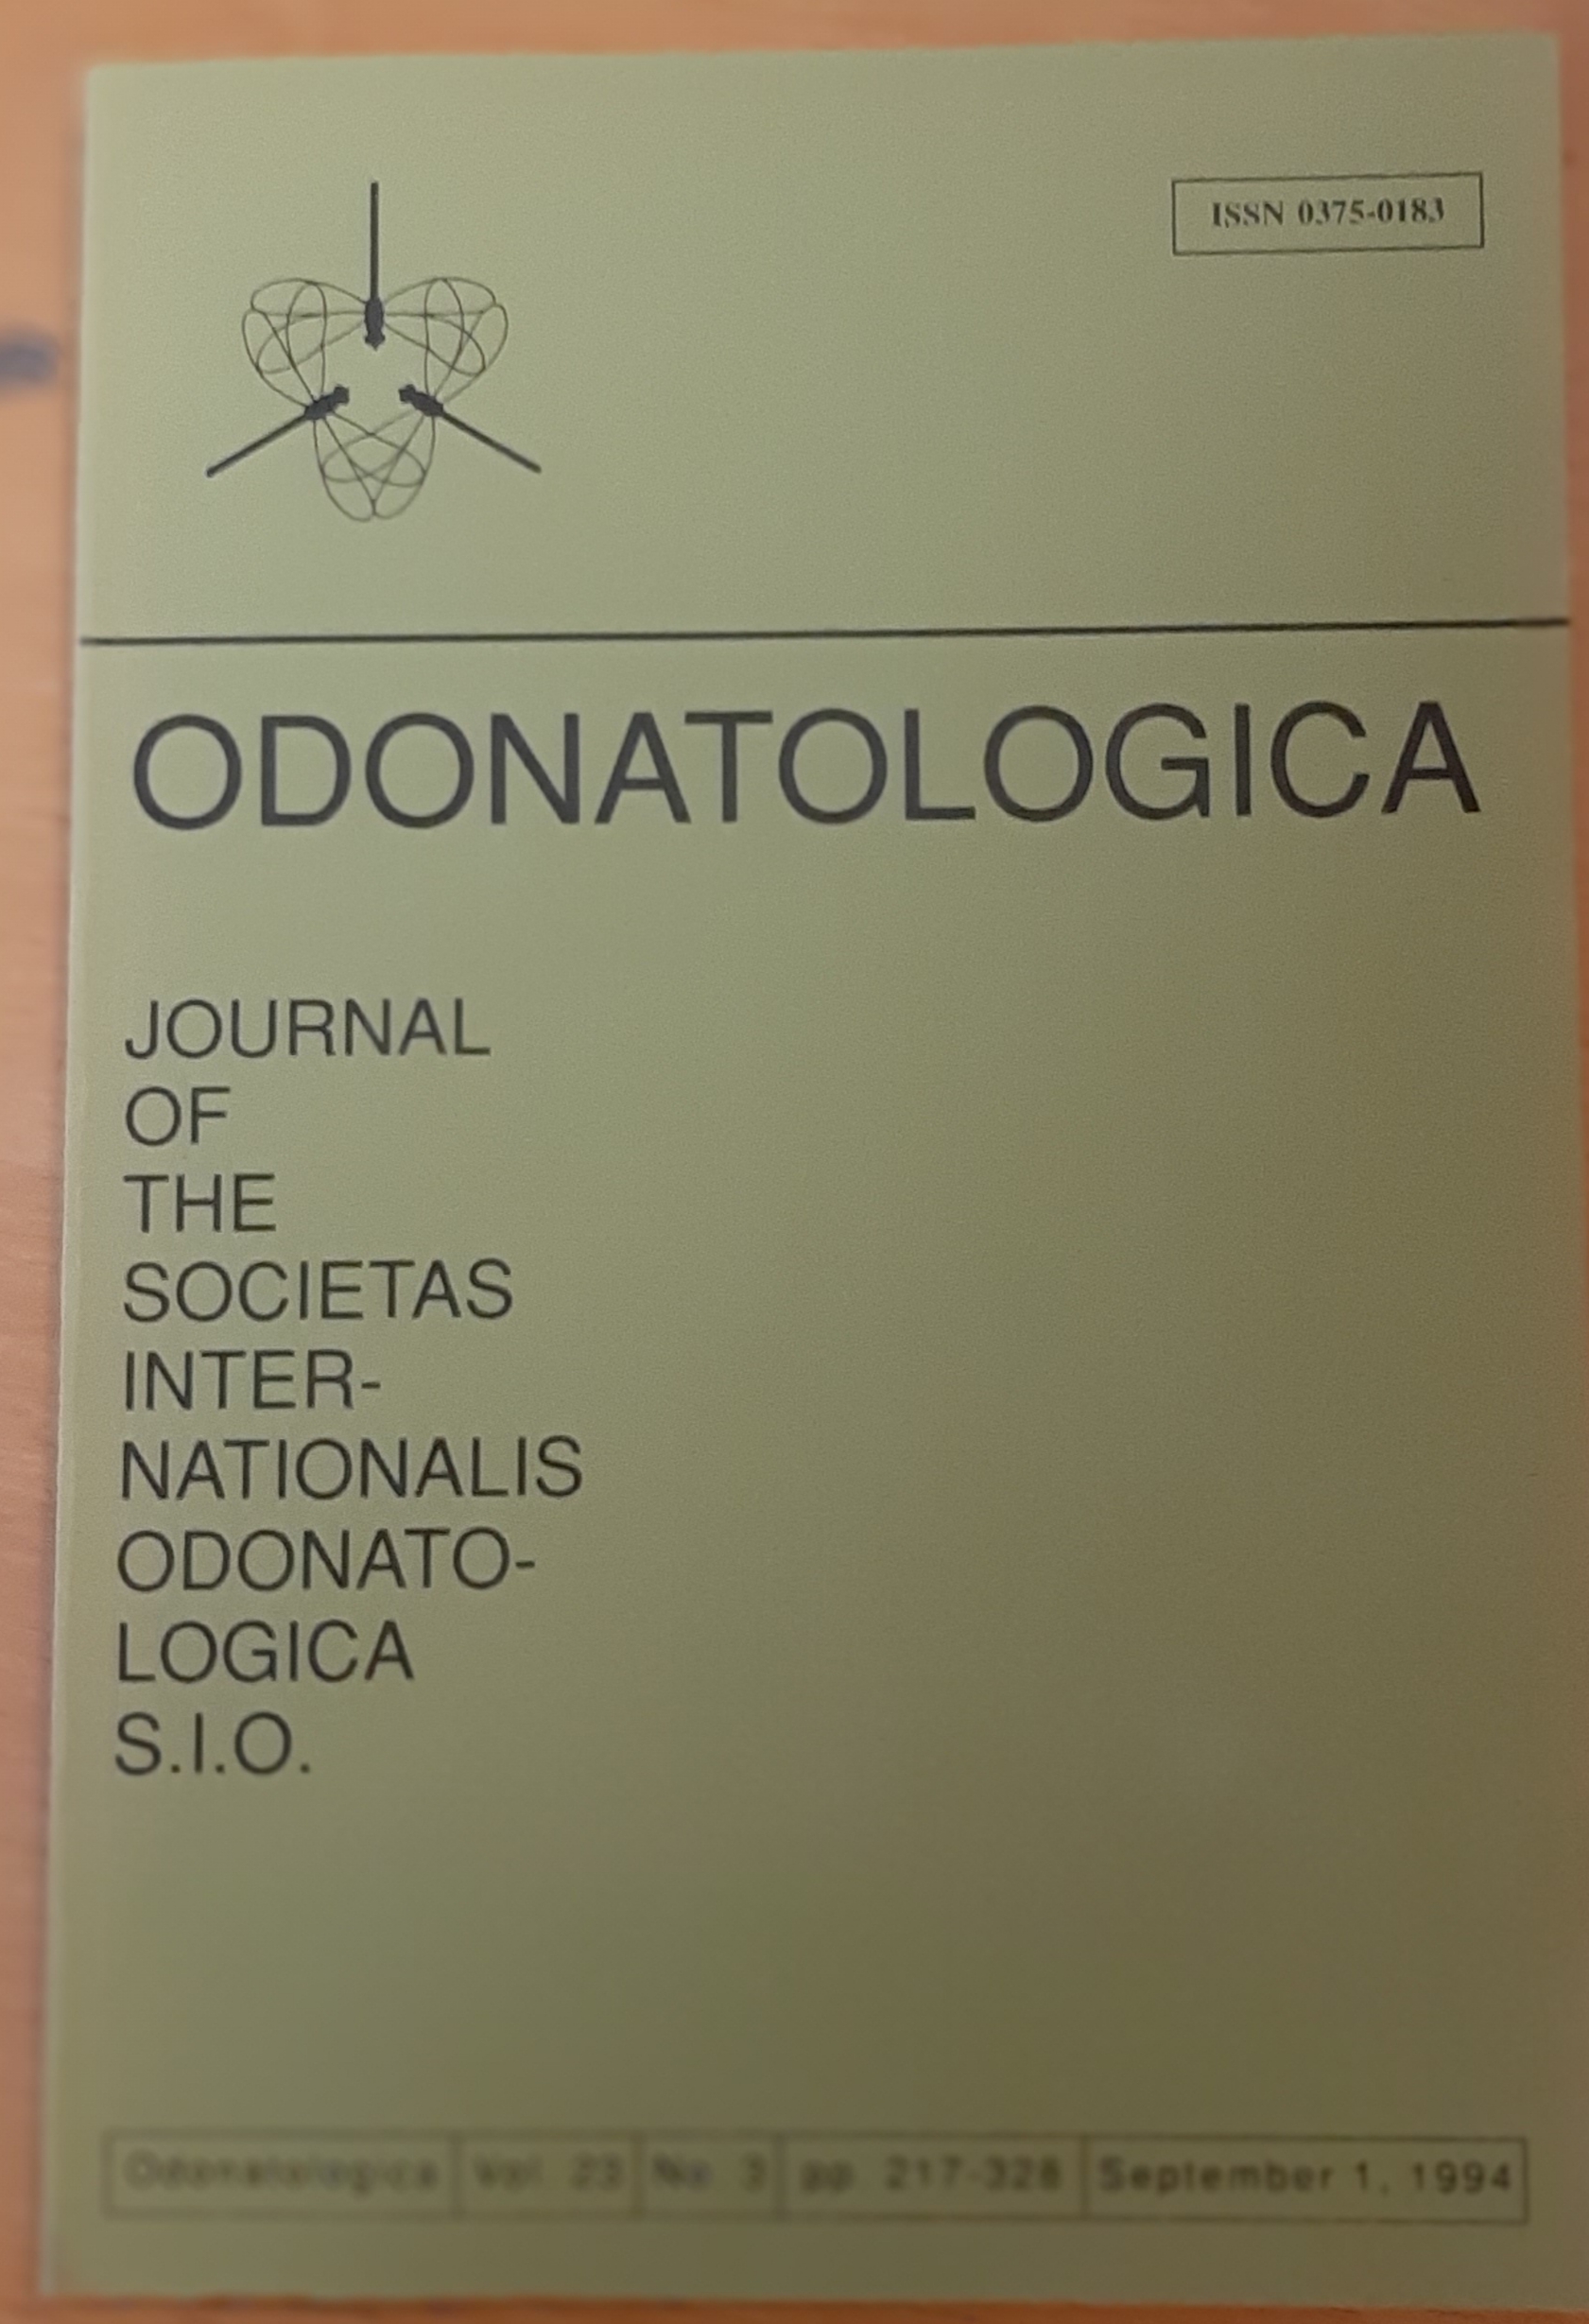 Odonatologica 1994/23. évf. 3. szám Journal of the Societas Internationalis Odonatologica S.I.O. (Rippl-Rónai Múzeum RR-F)